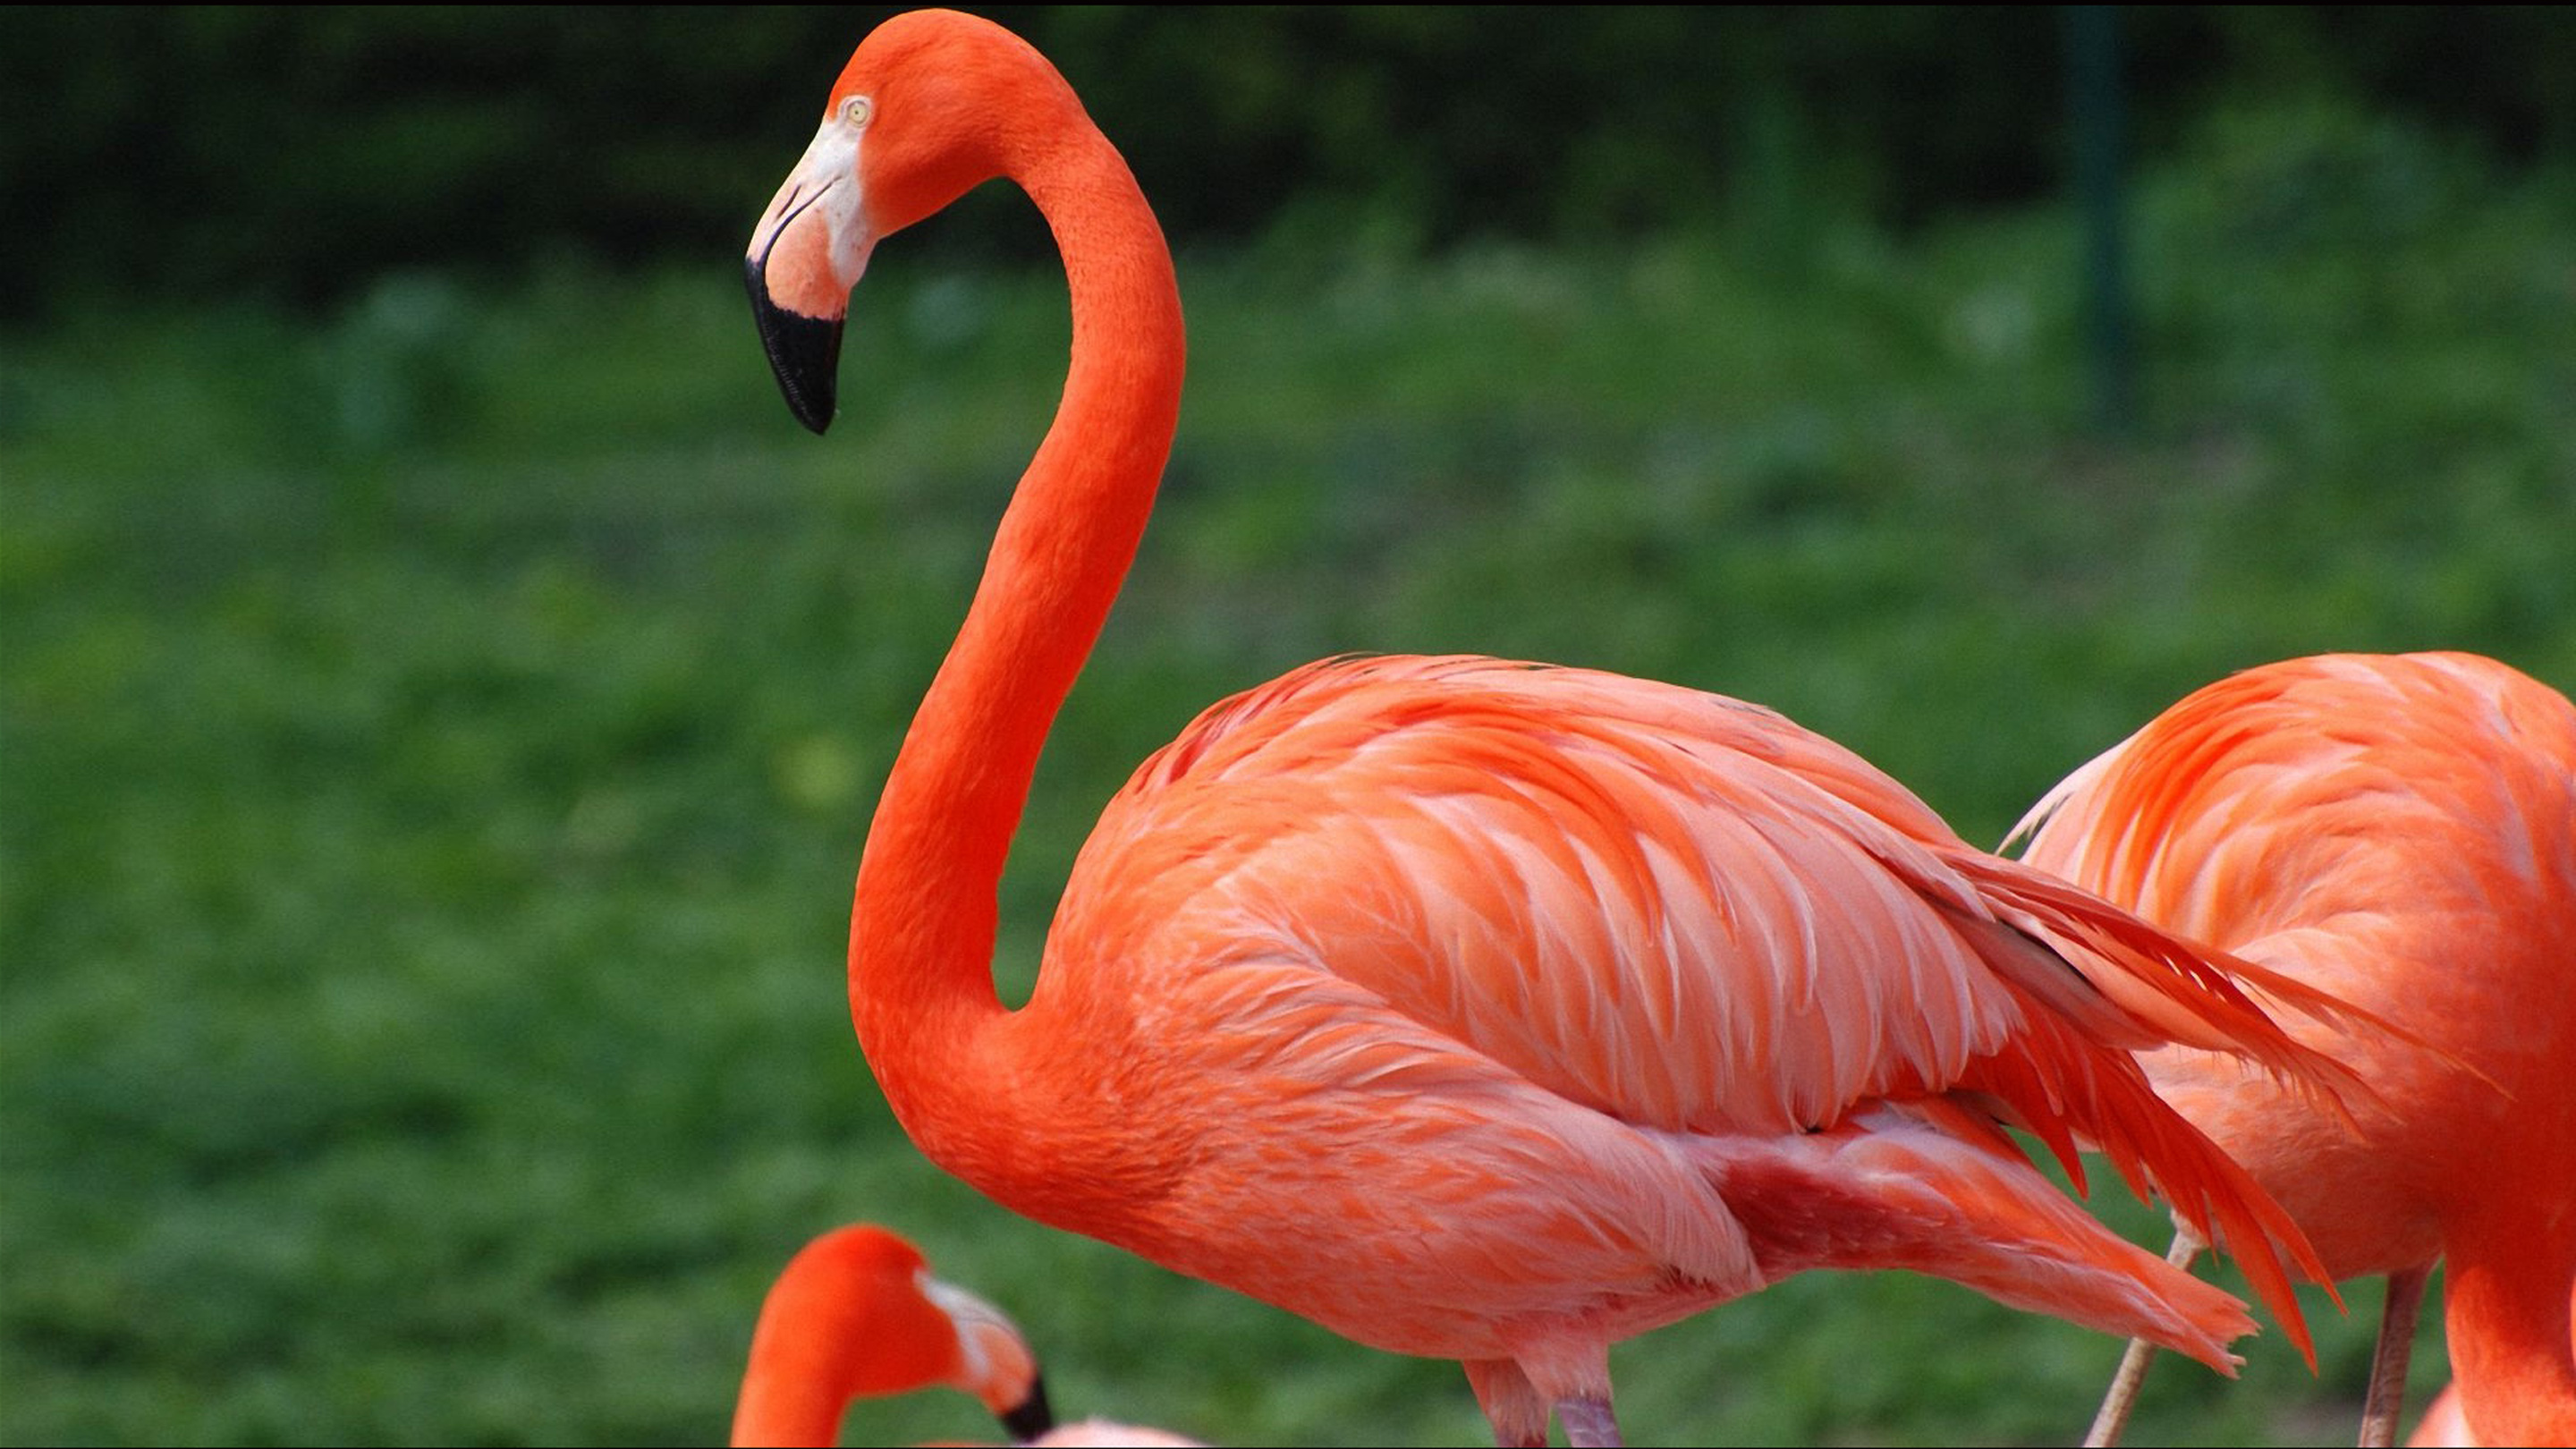 Red Flamingo Desktop Wallpaper Hd For Mobile Phones And Laptop